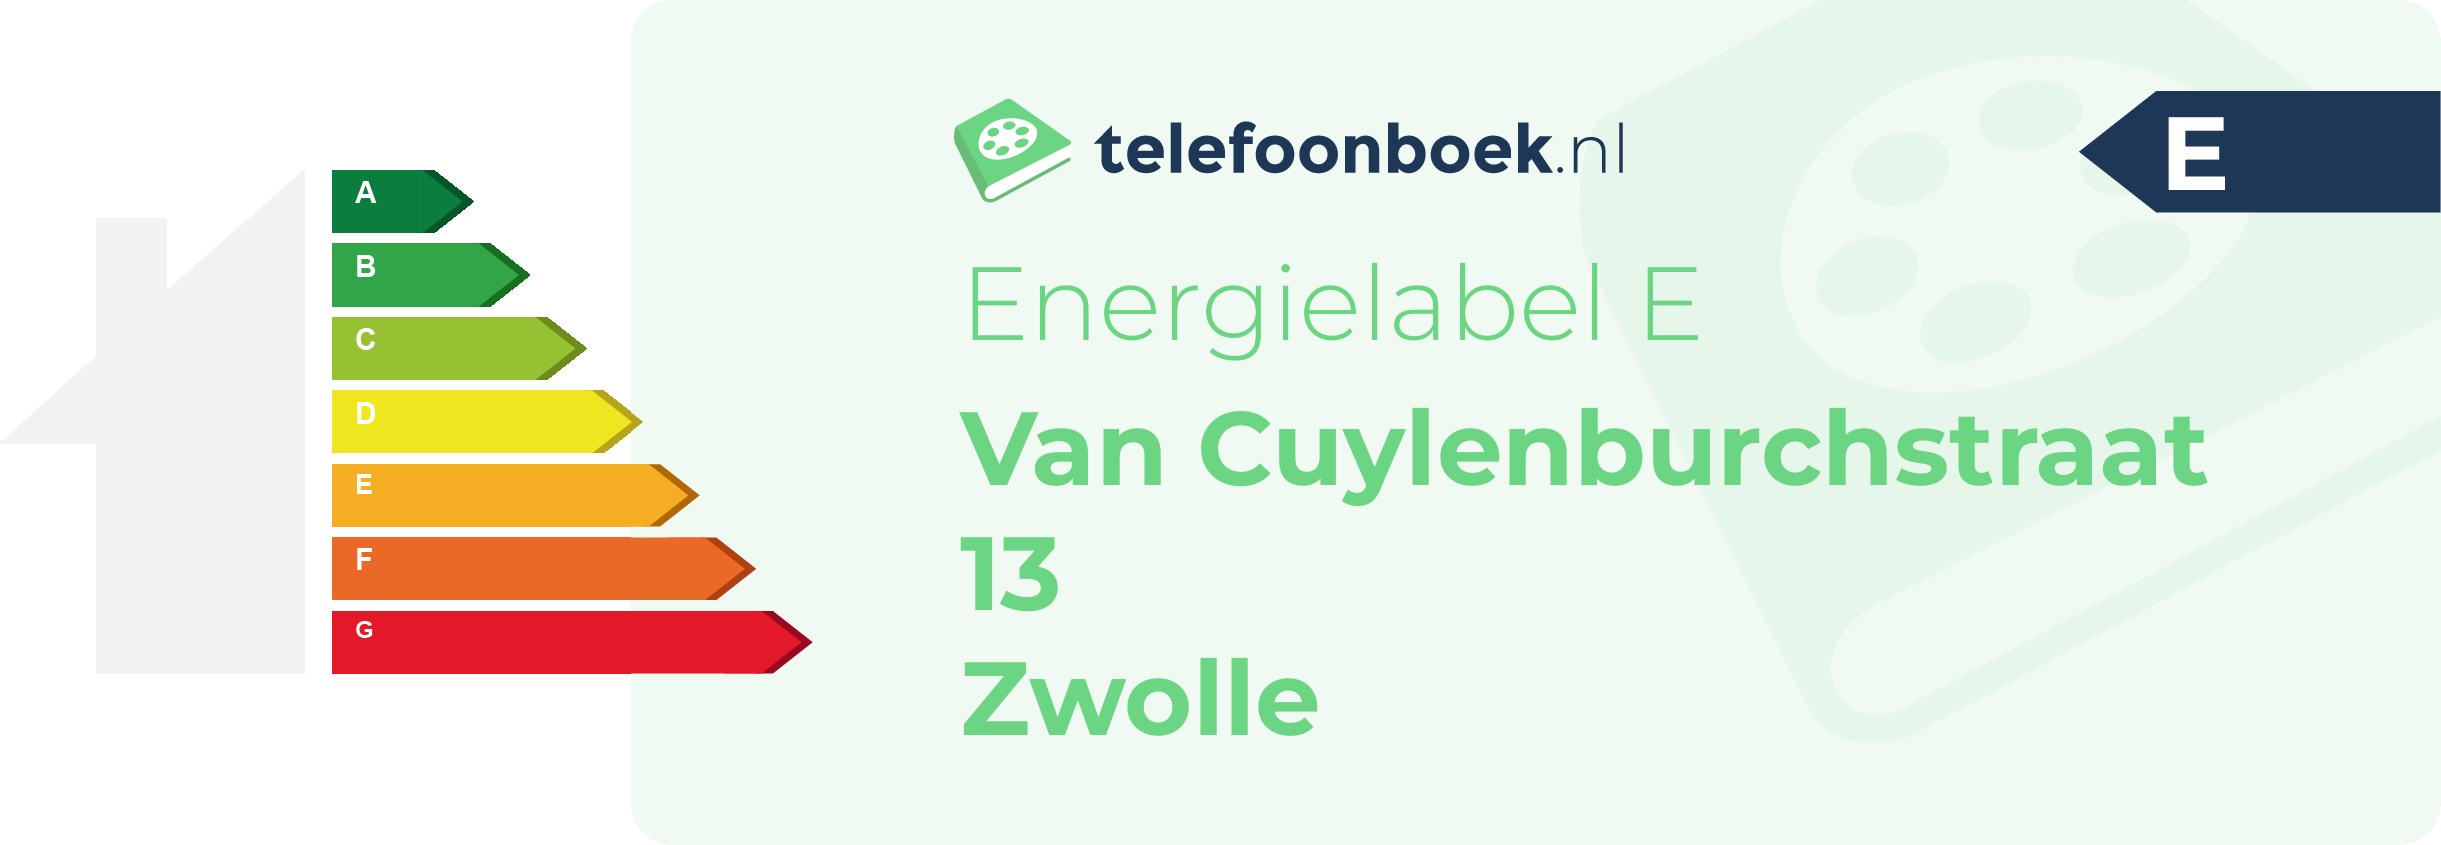 Energielabel Van Cuylenburchstraat 13 Zwolle